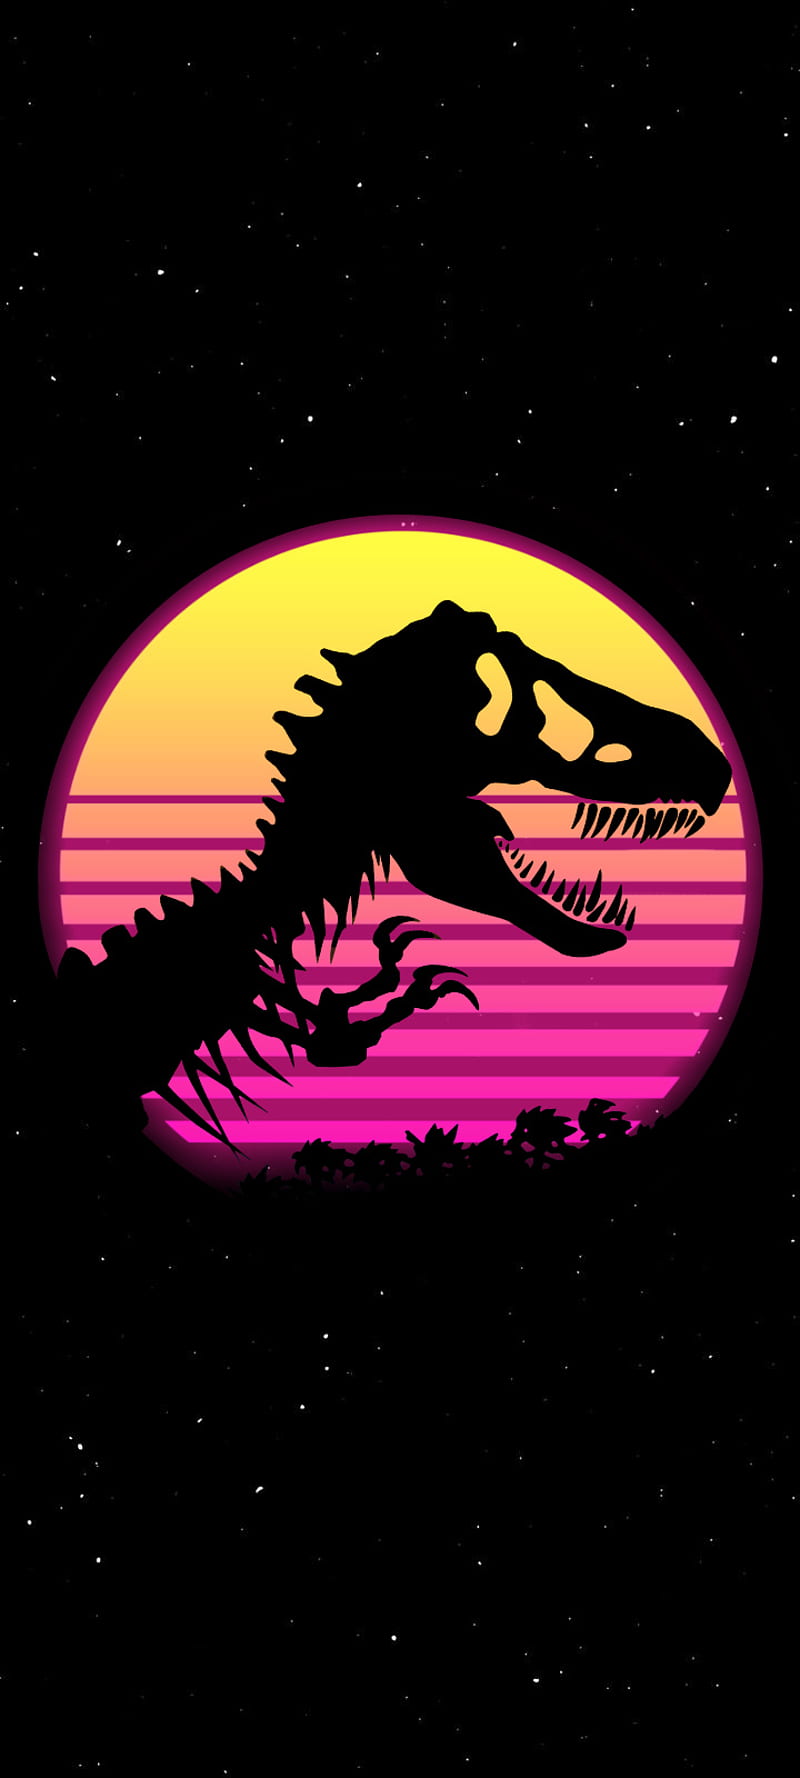 Jurassic World Dominion 2020 Poster 4K Ultra HD Mobile Wallpaper